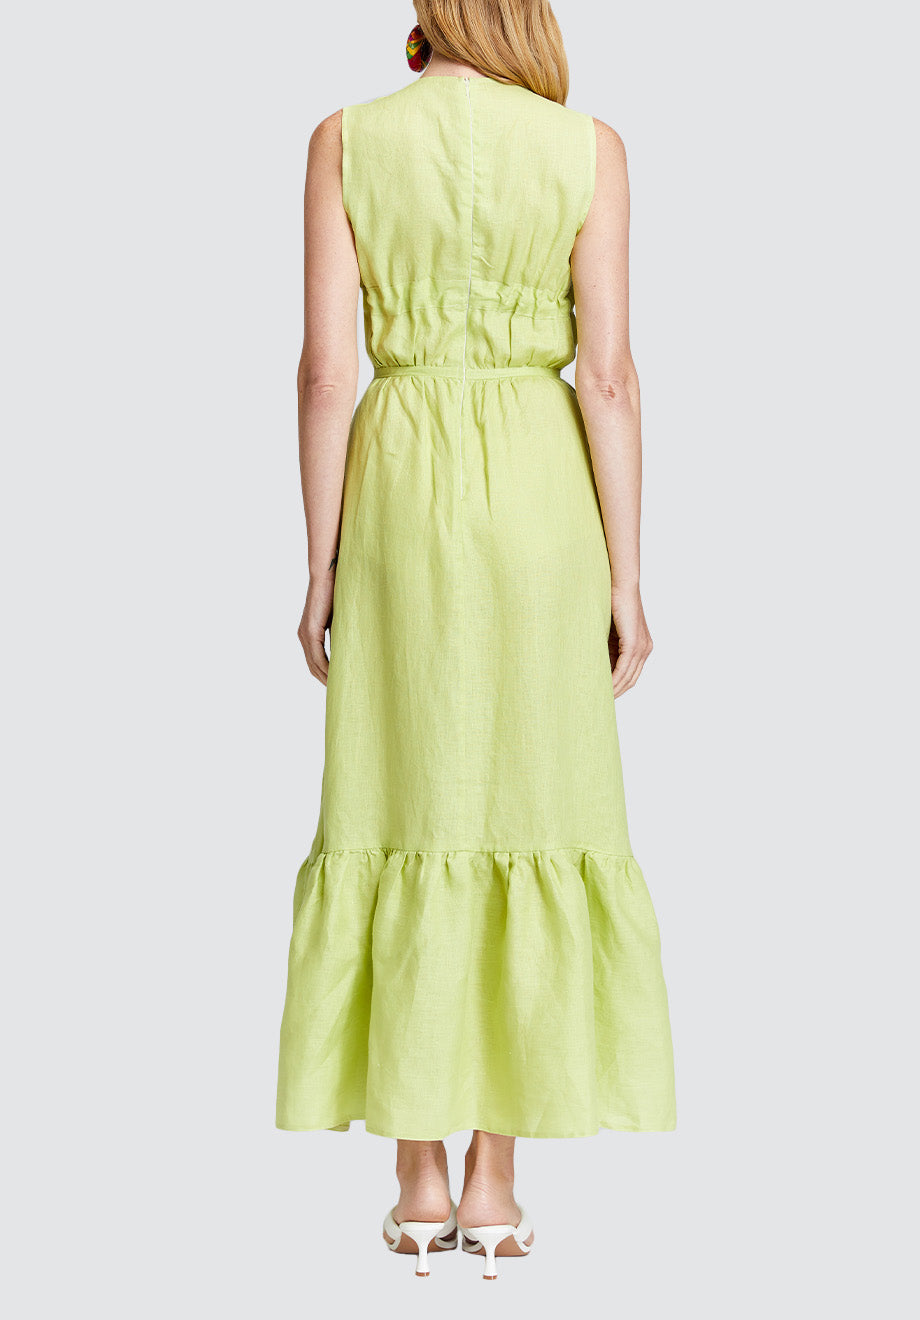 Lime Flower Dress